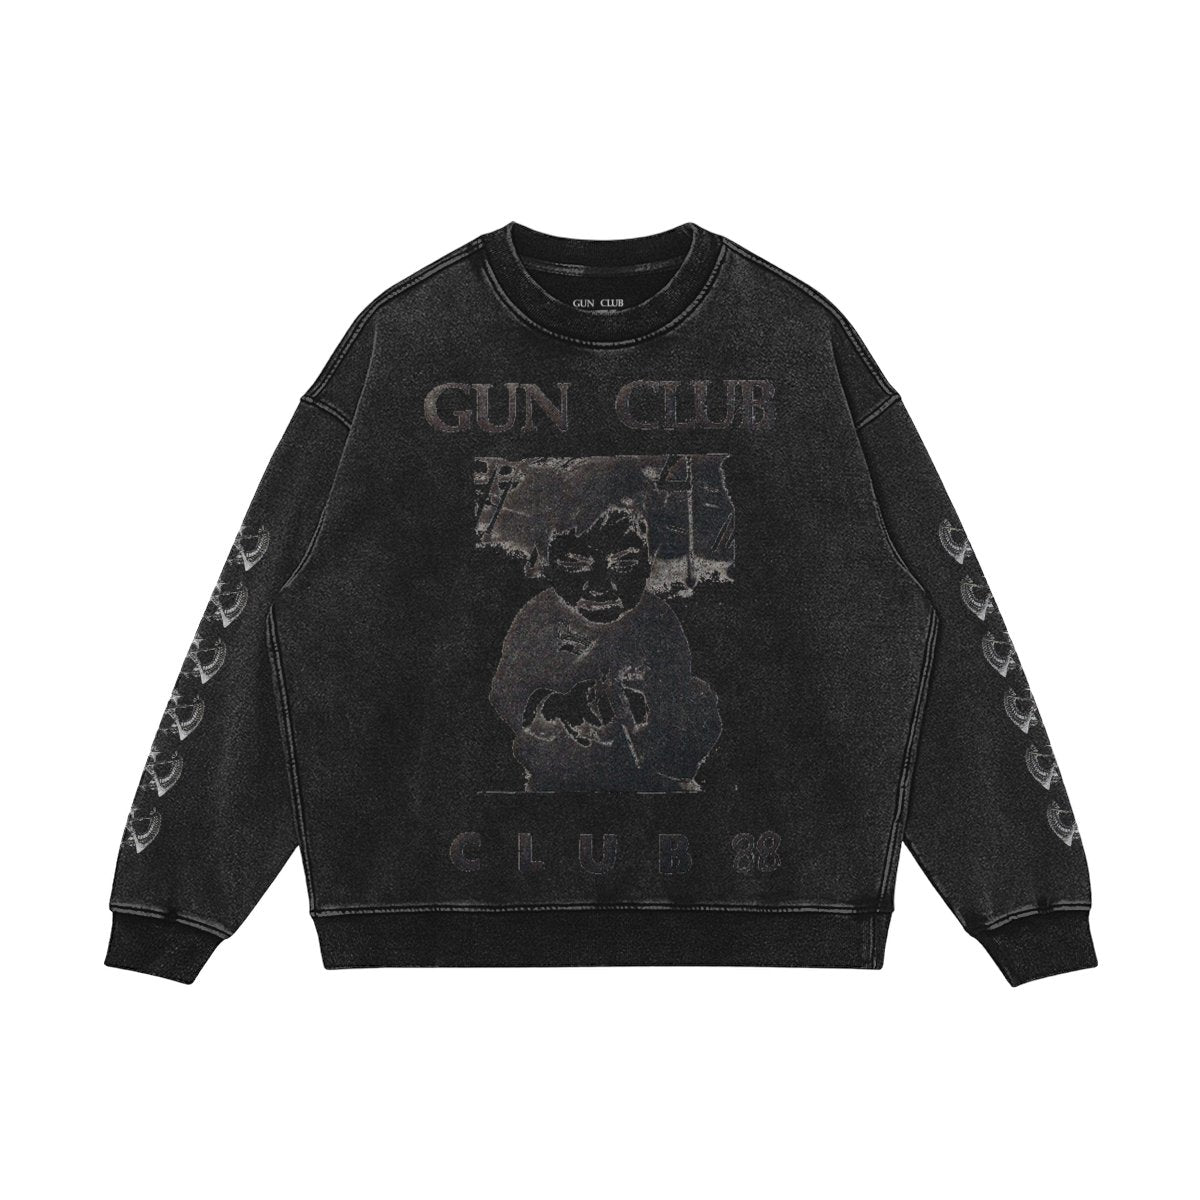 "Gun Club" Luxe Sweatshirt